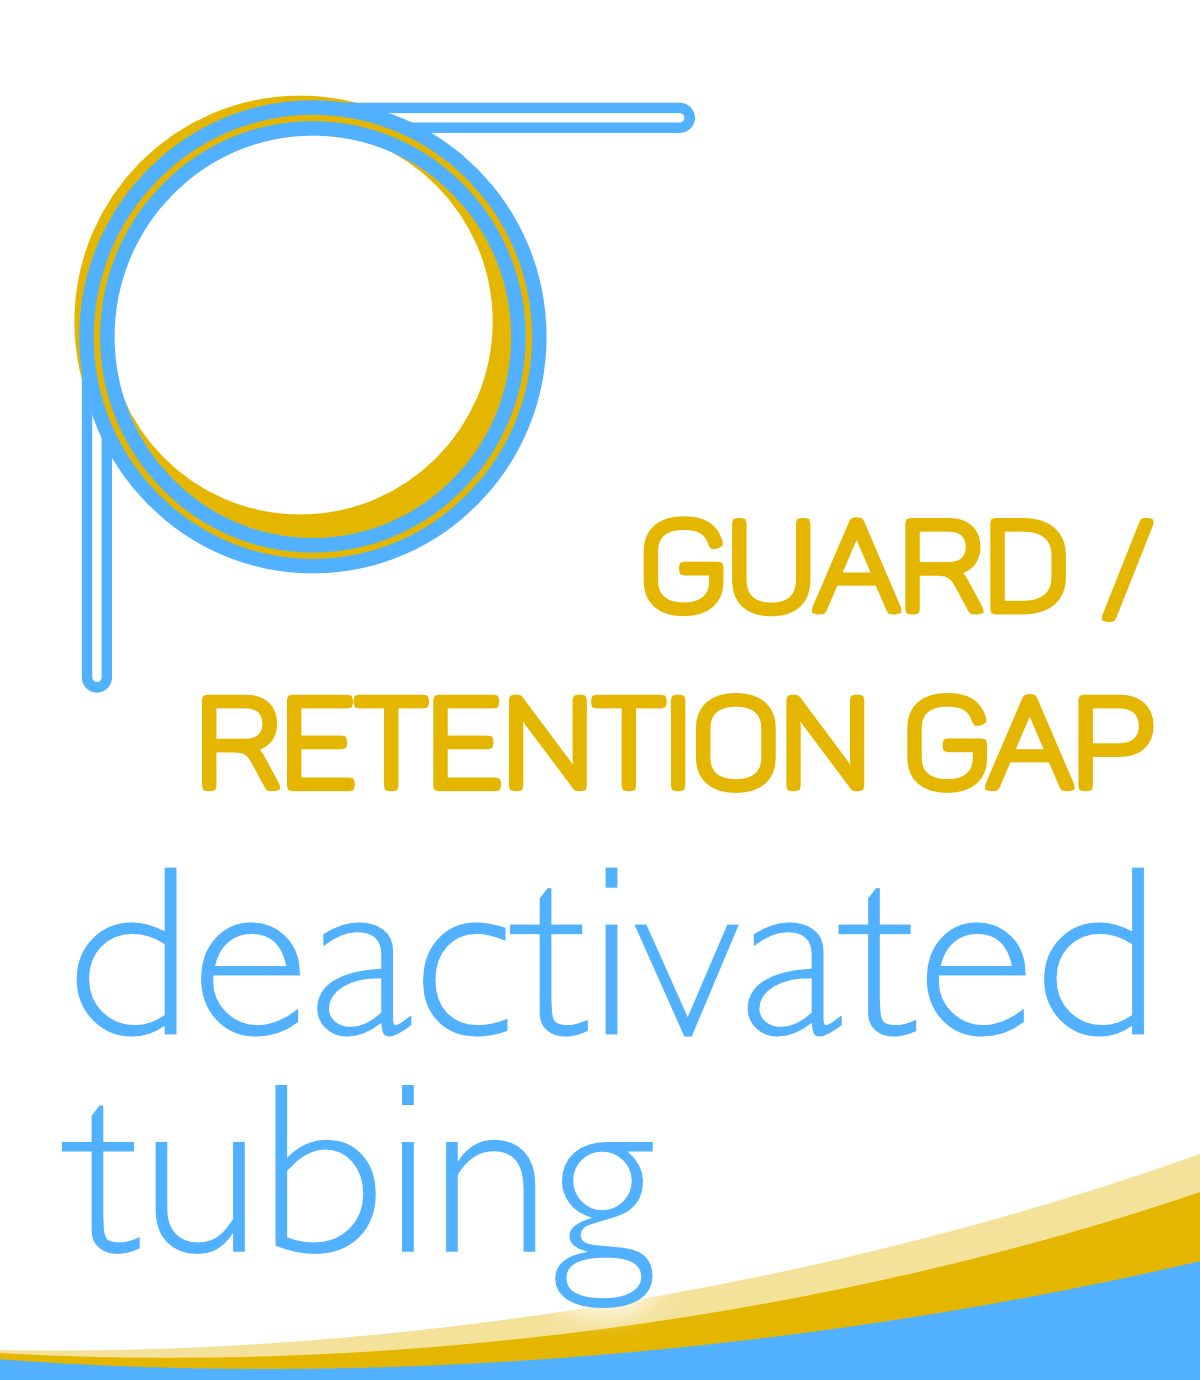 Retention Gap Image